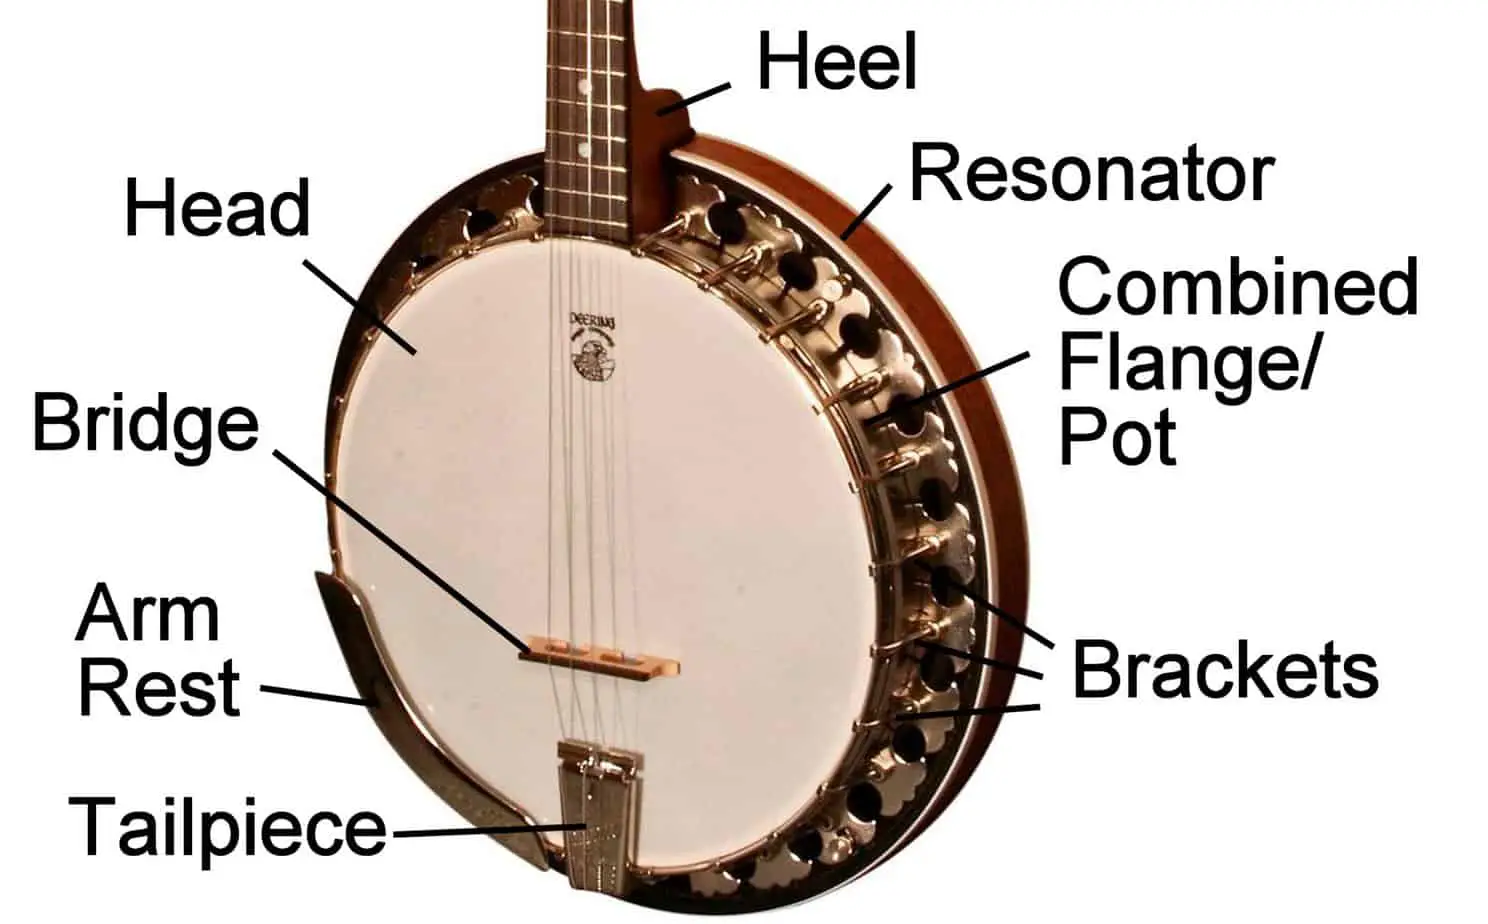 Components Of A Resonator Banjo